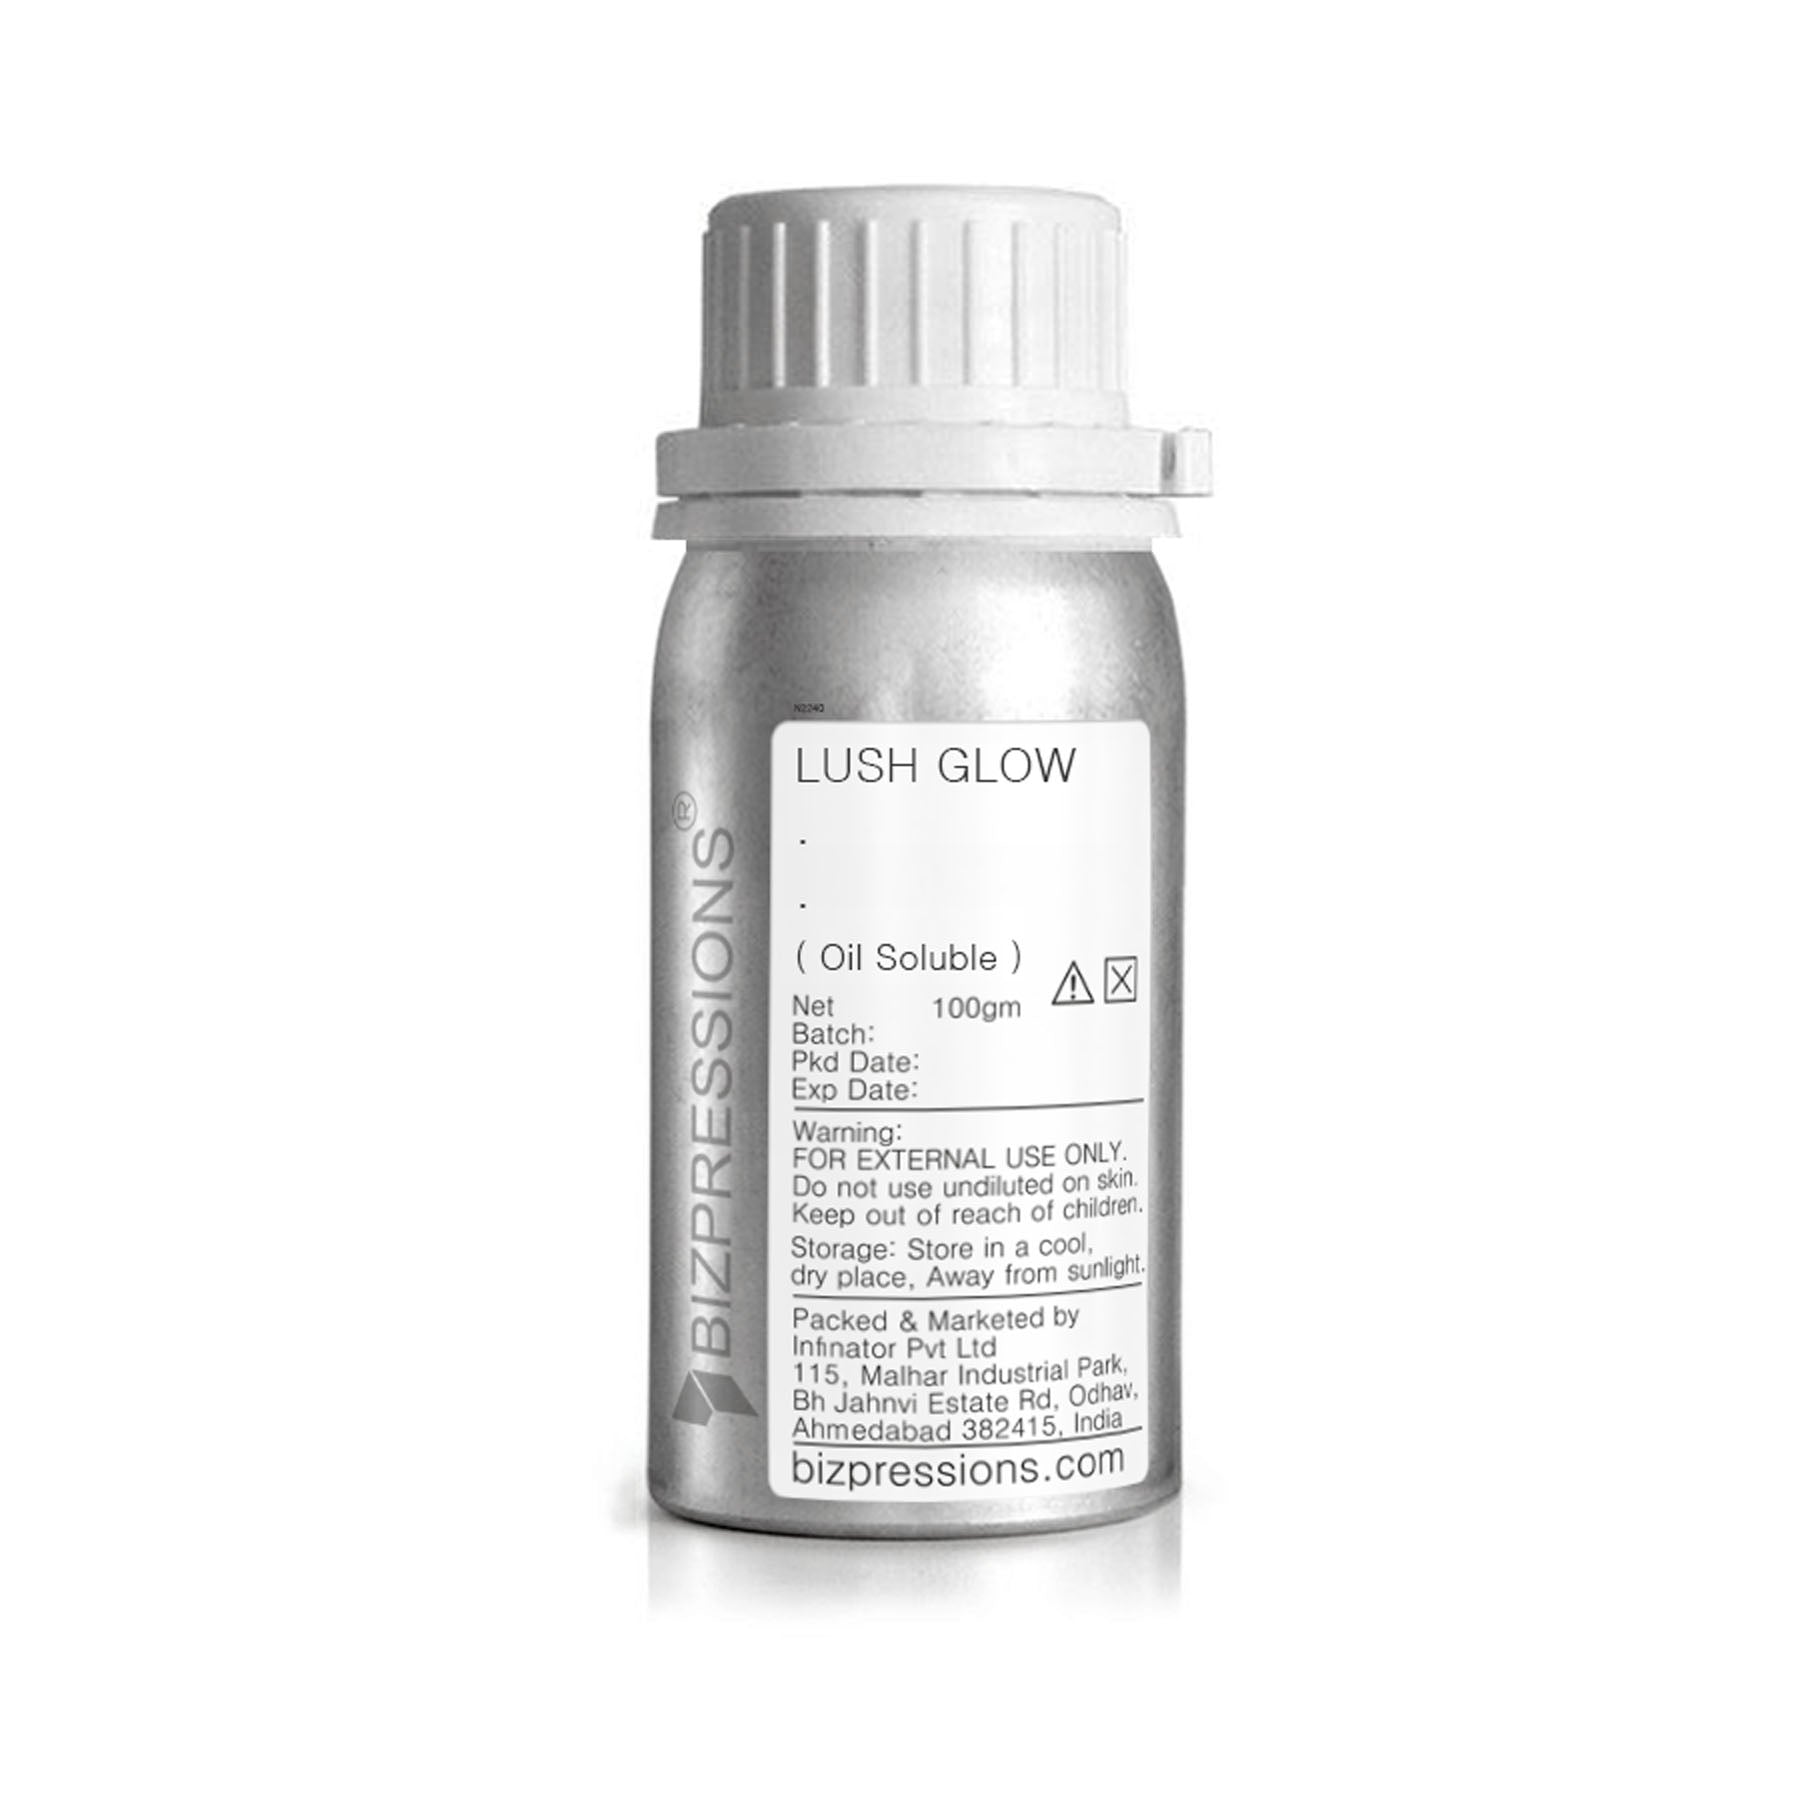 LUSH GLOW - Fragrance ( Oil Soluble ) - 100 gm